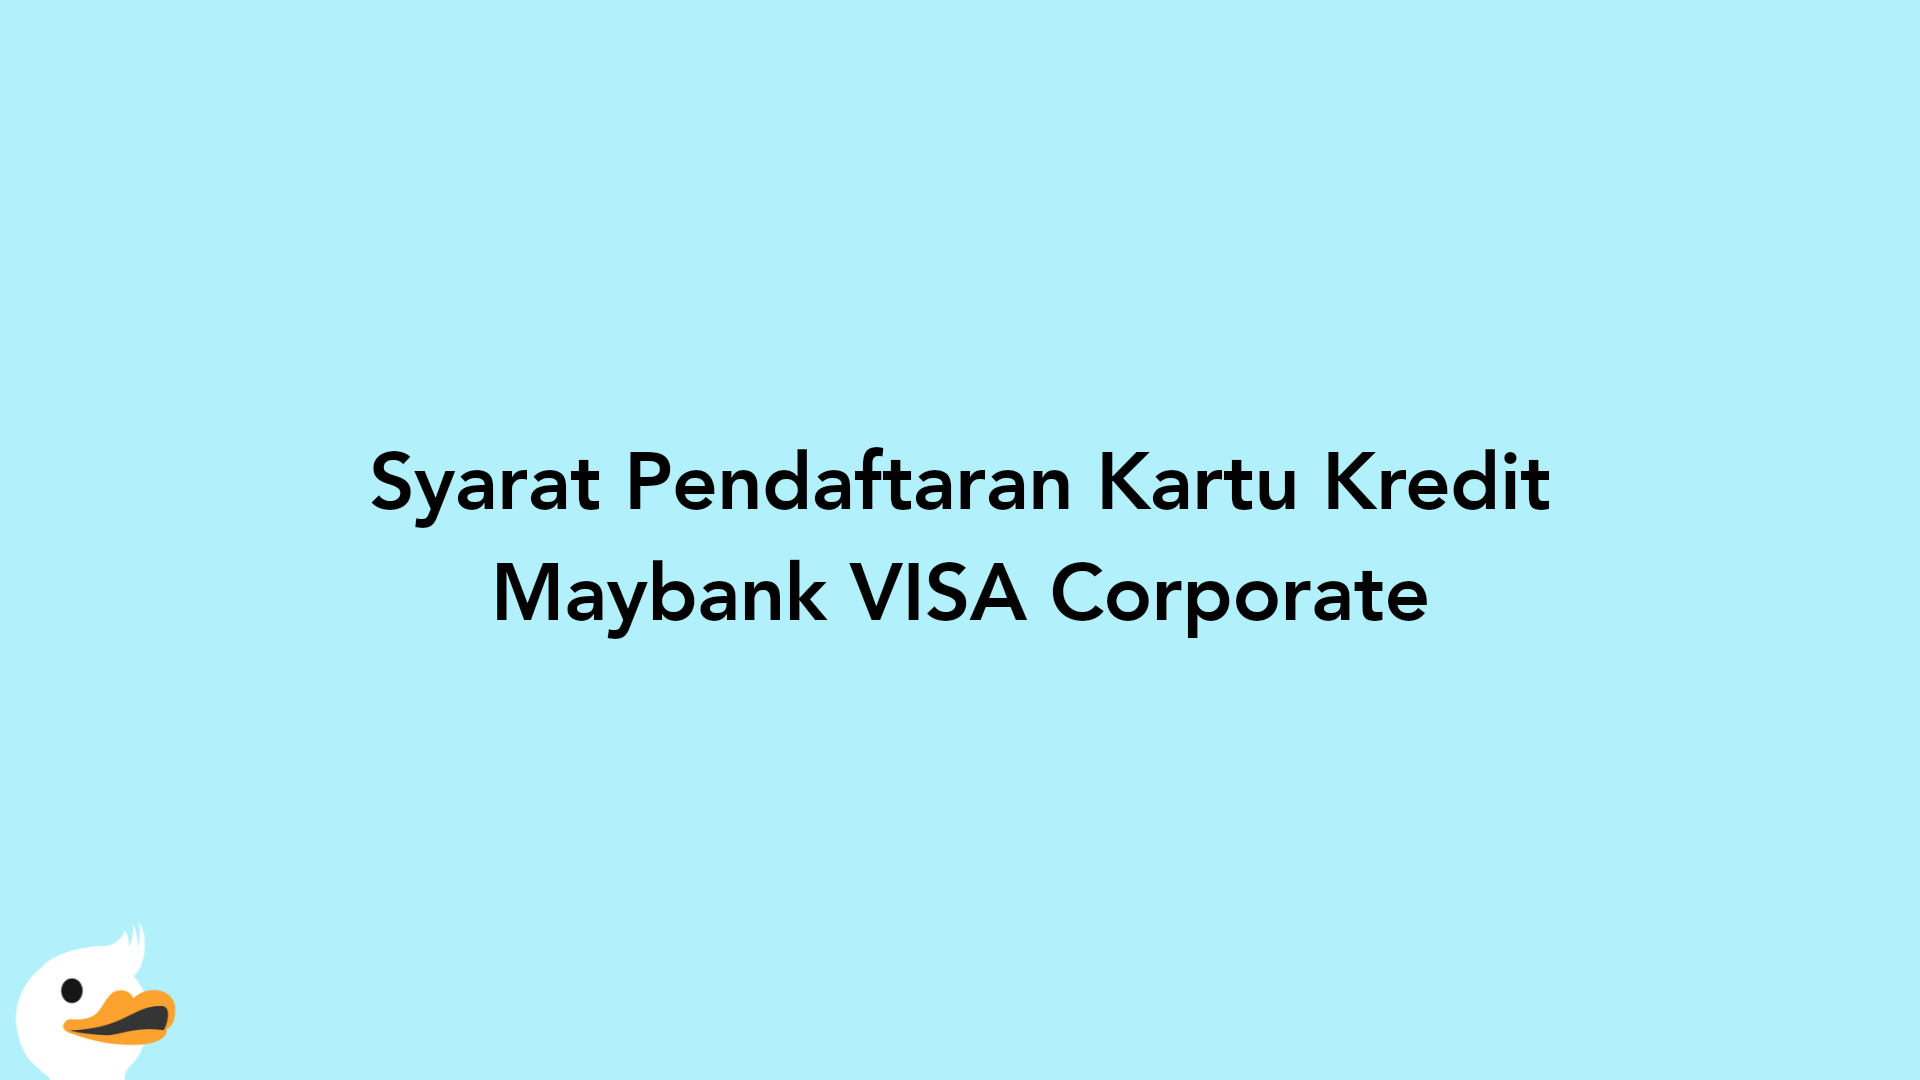 Syarat Pendaftaran Kartu Kredit Maybank VISA Corporate